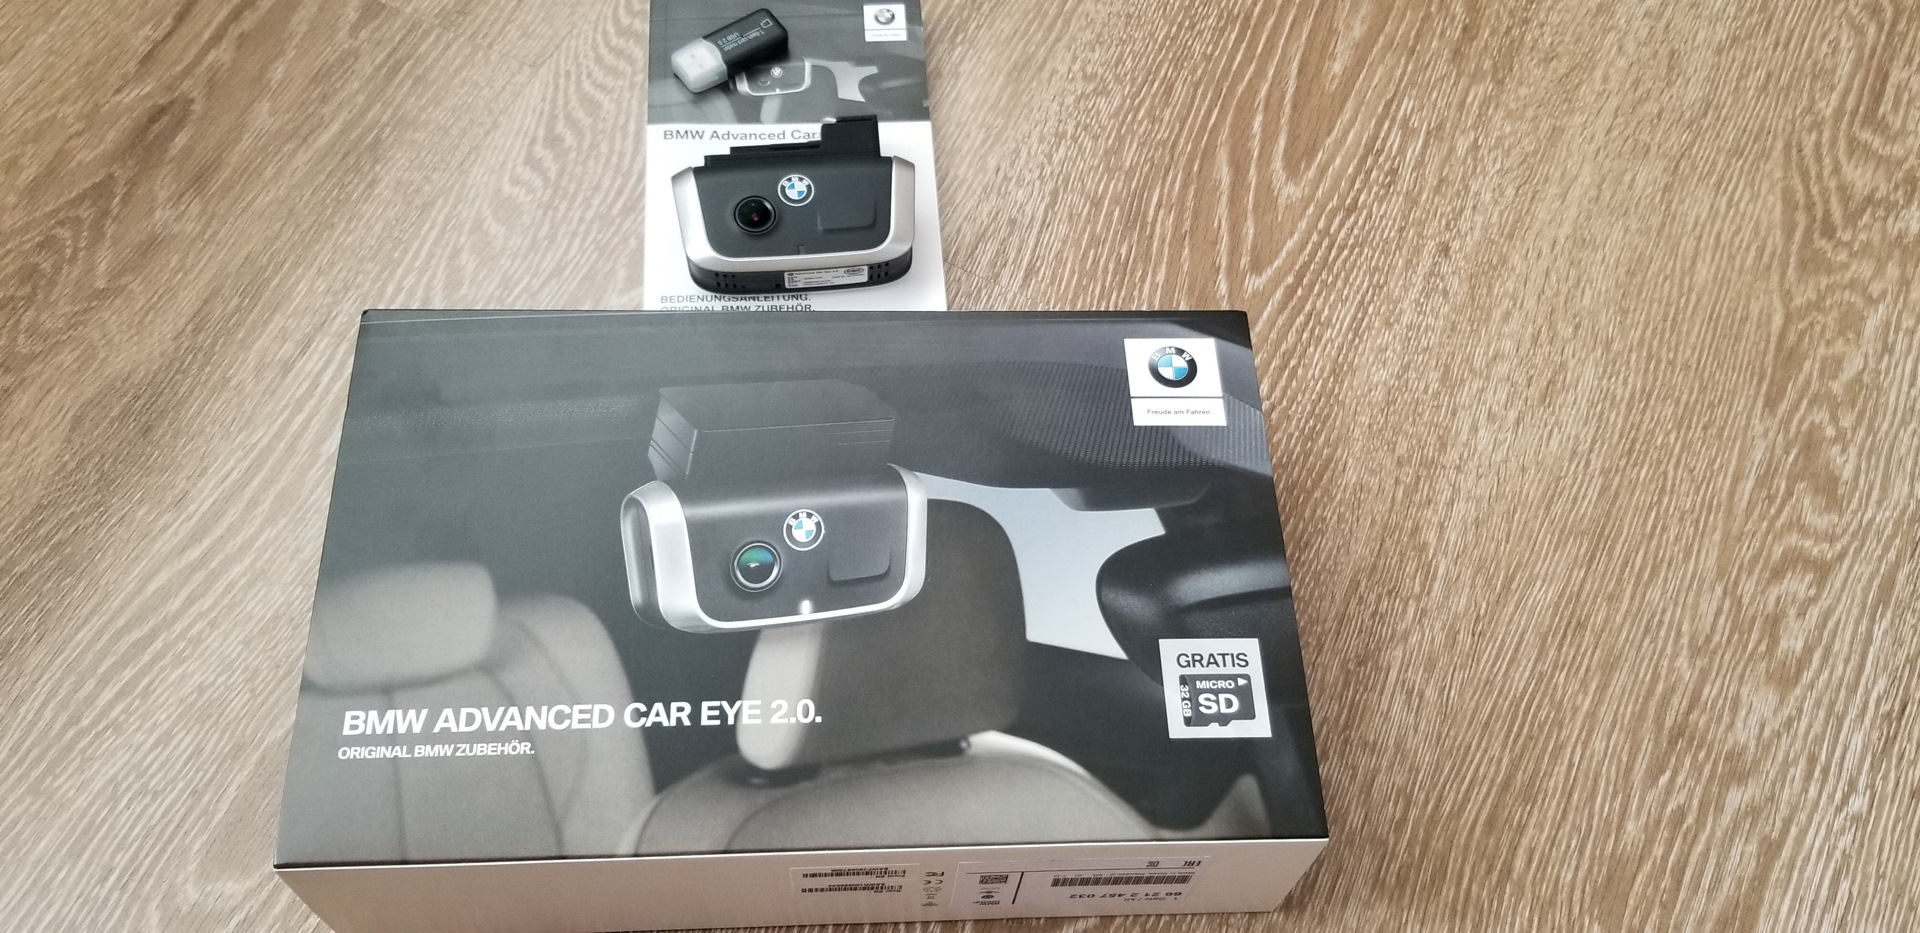 Регистратор bmw. BMW Advanced car Eye 2.0. Регистратор BMW Advanced car Eye. Видеорегистратор BMW Advanced car Eye 2.0 Pro. Видеорегистратор BMW Advanced car Eye (Front+Rear cam), 2 камеры, GPS.